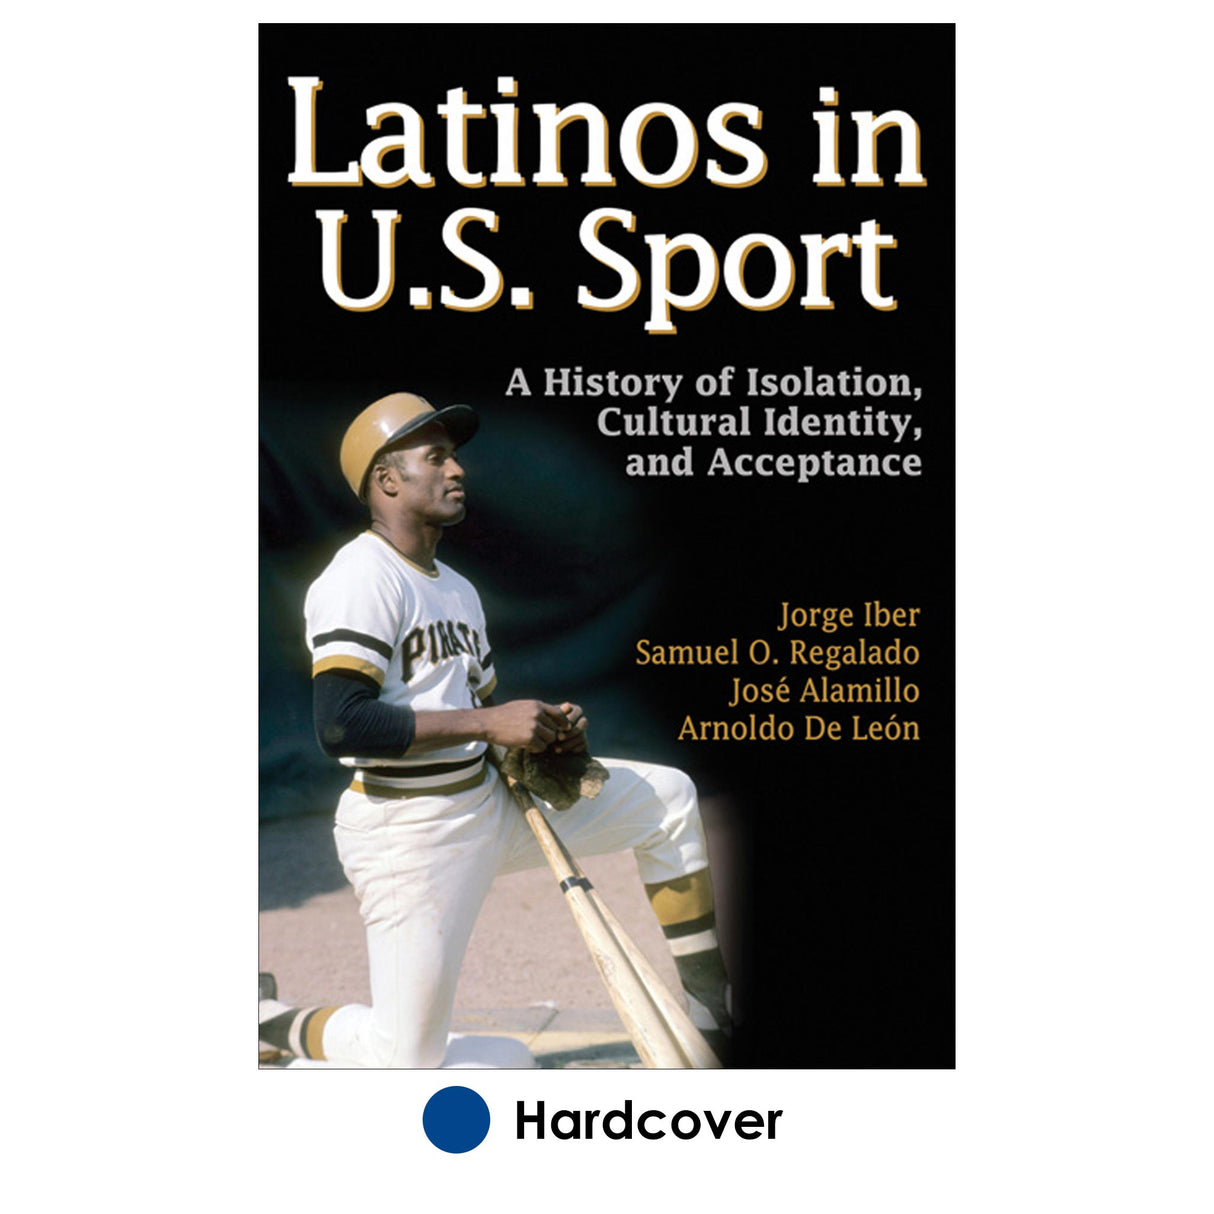 Latinos in U.S Sport